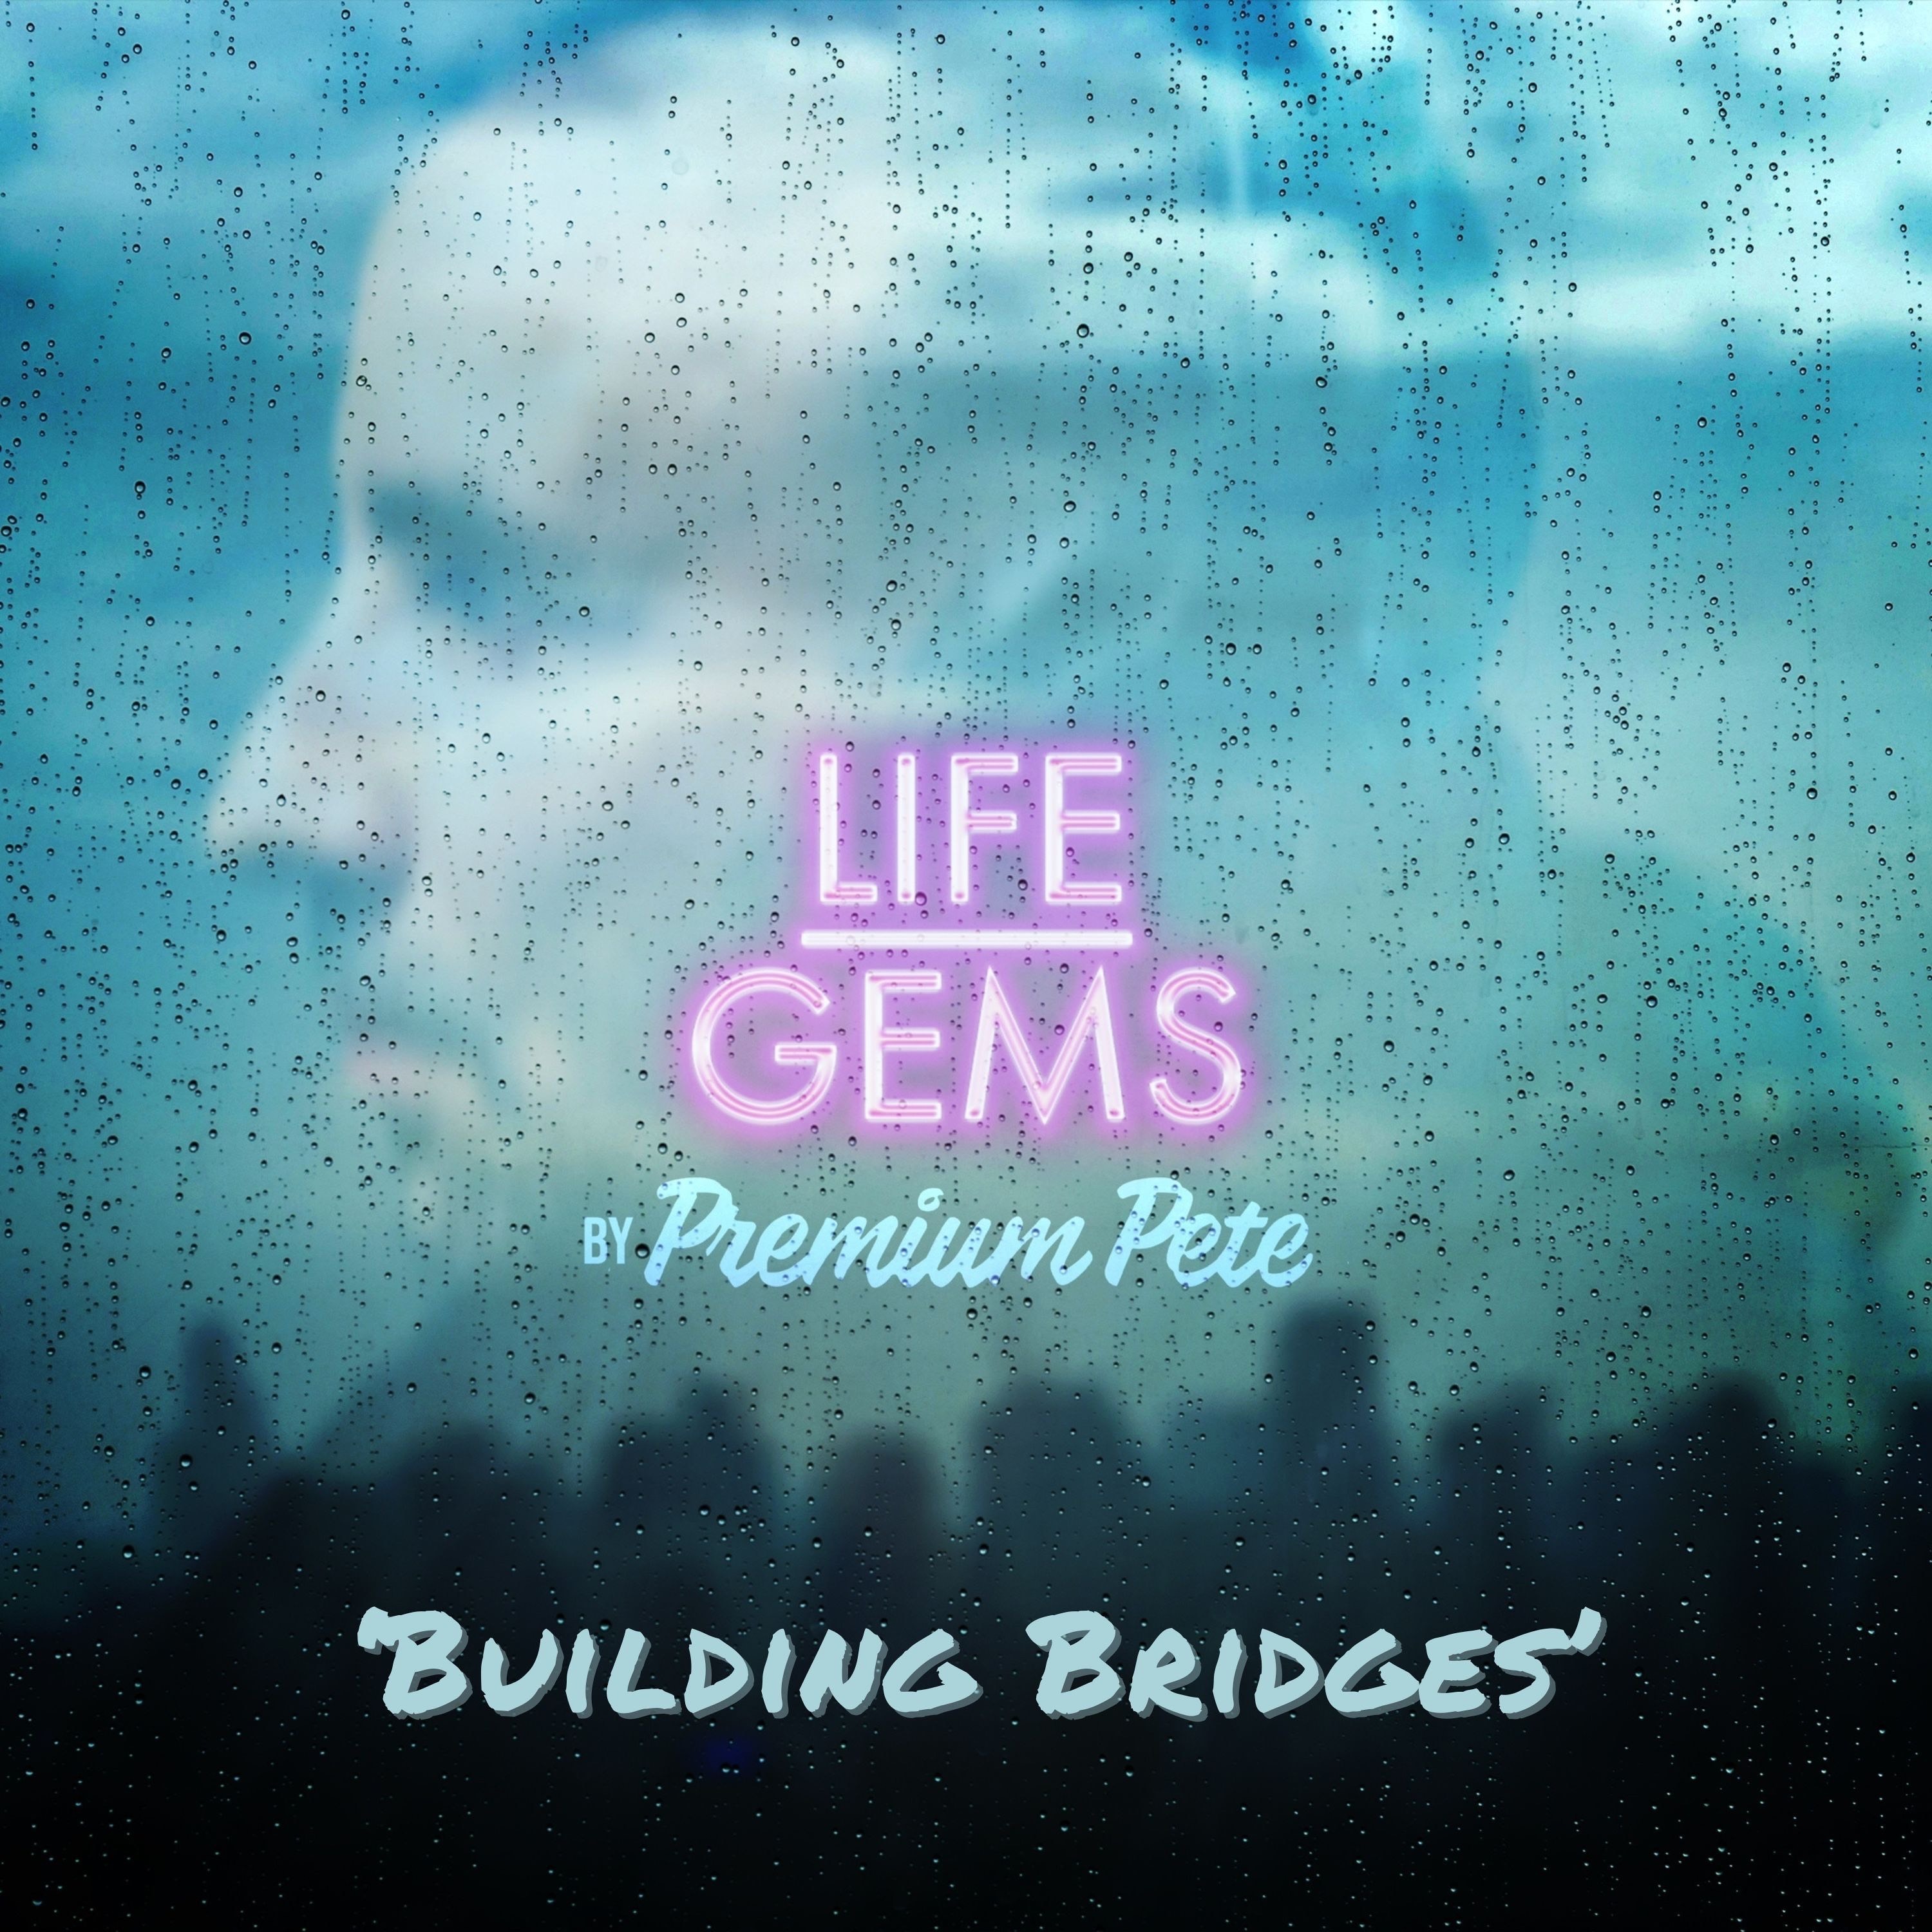 Life Gems "Building Bridges"